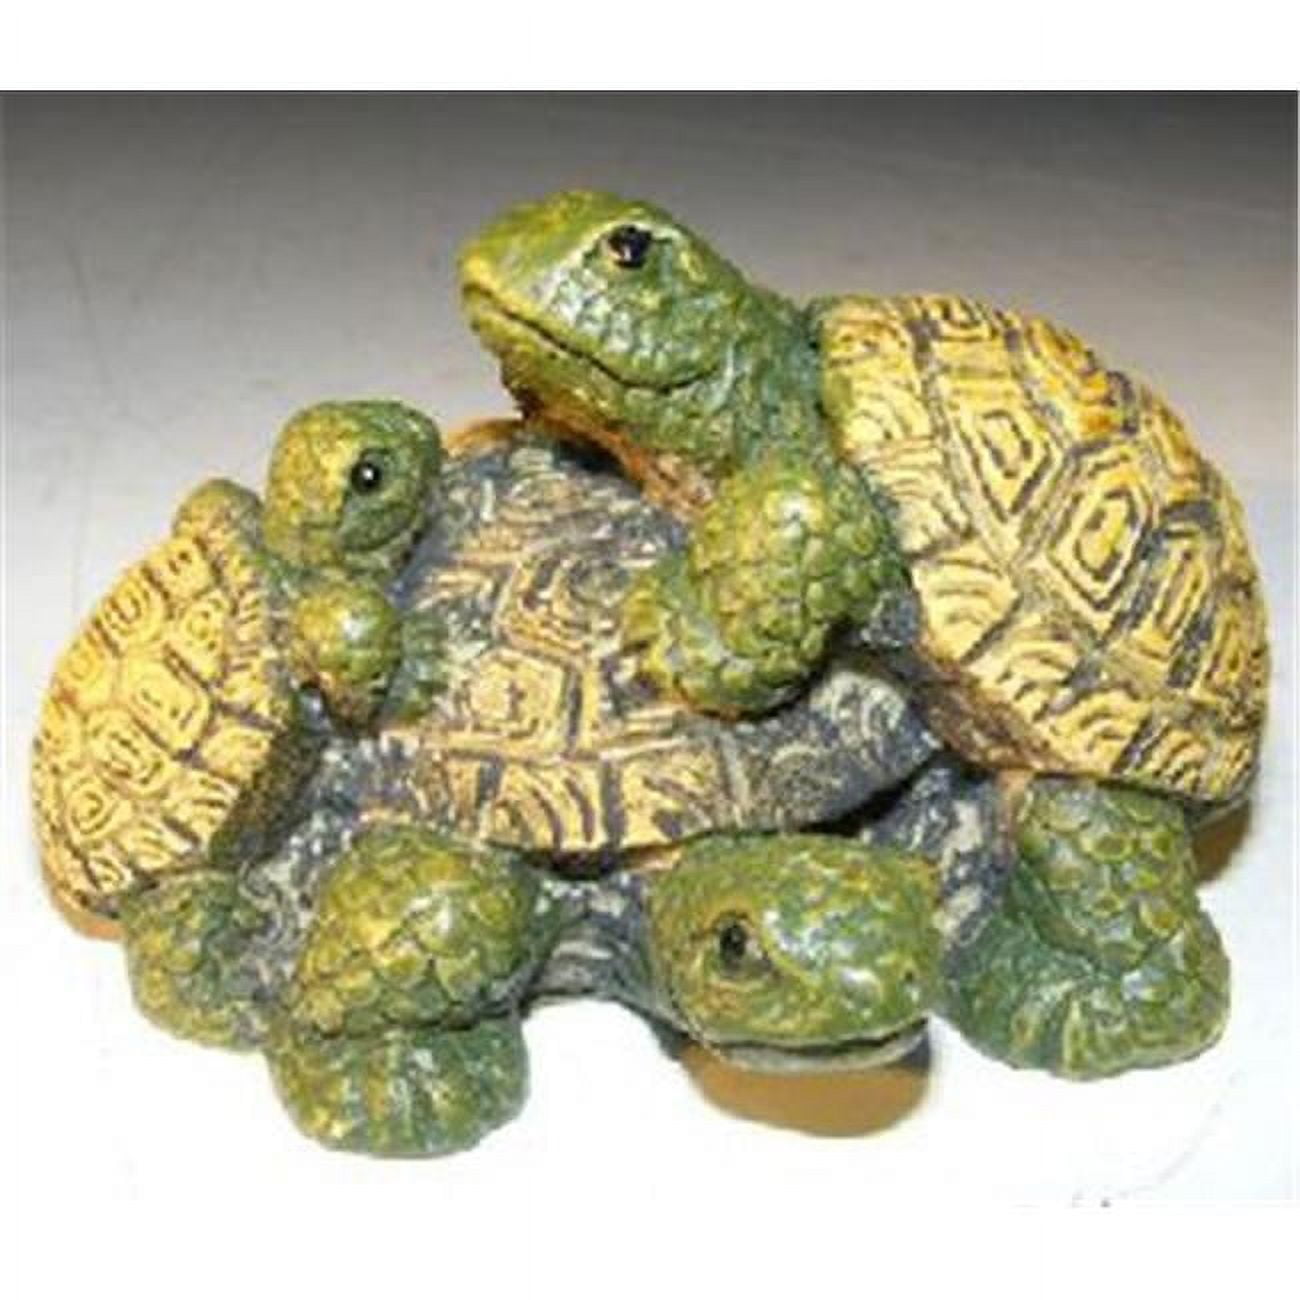 Picture of Bonsai Boy e3092 Miniature Turtle Figurine - Three Turtles - Two climbing on back